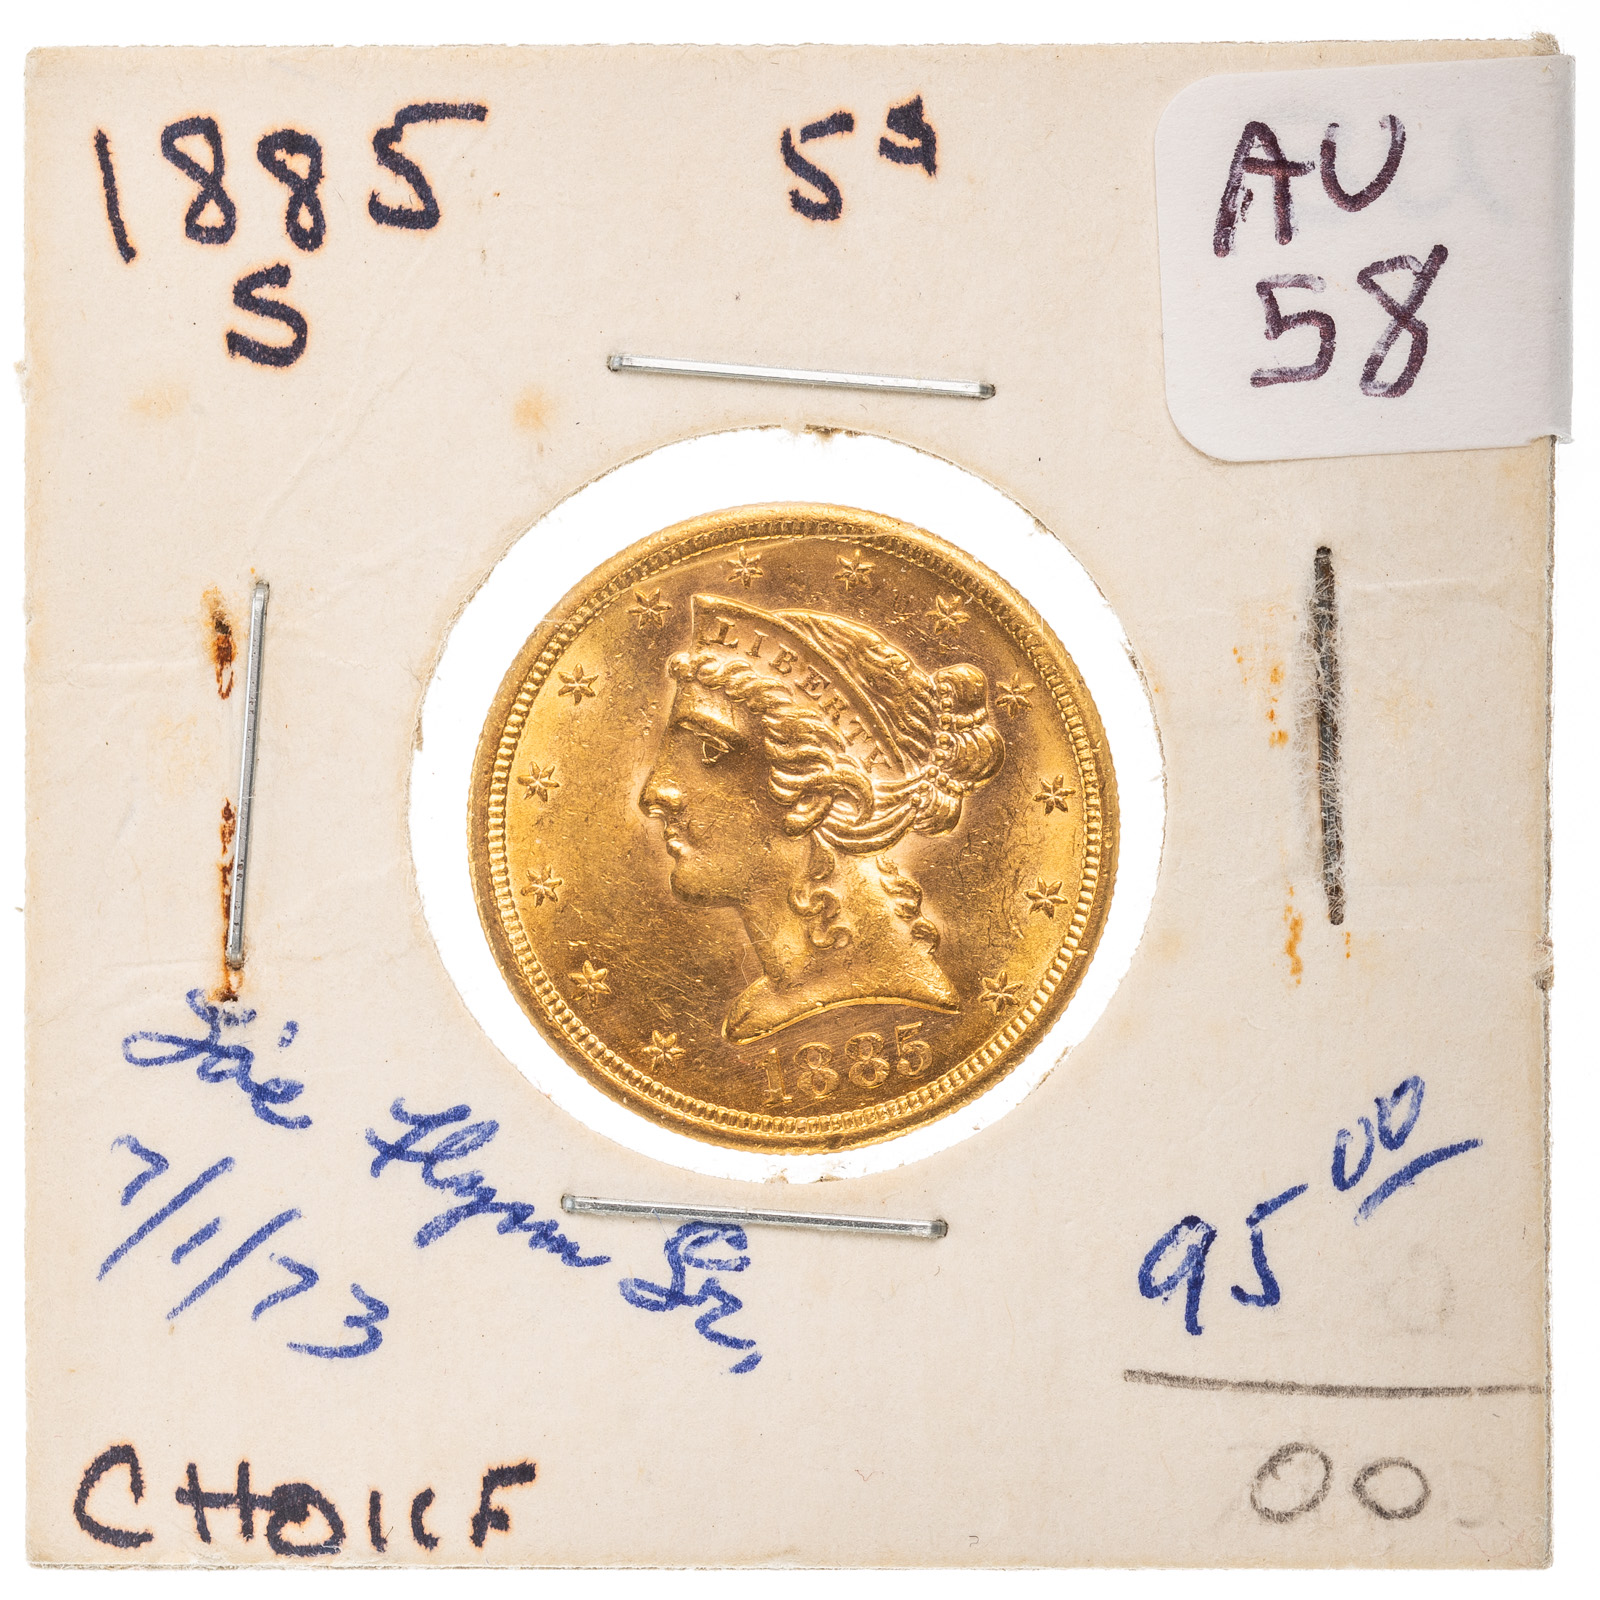 1885-S $5 LIBERTY GOLD HALF EAGLE